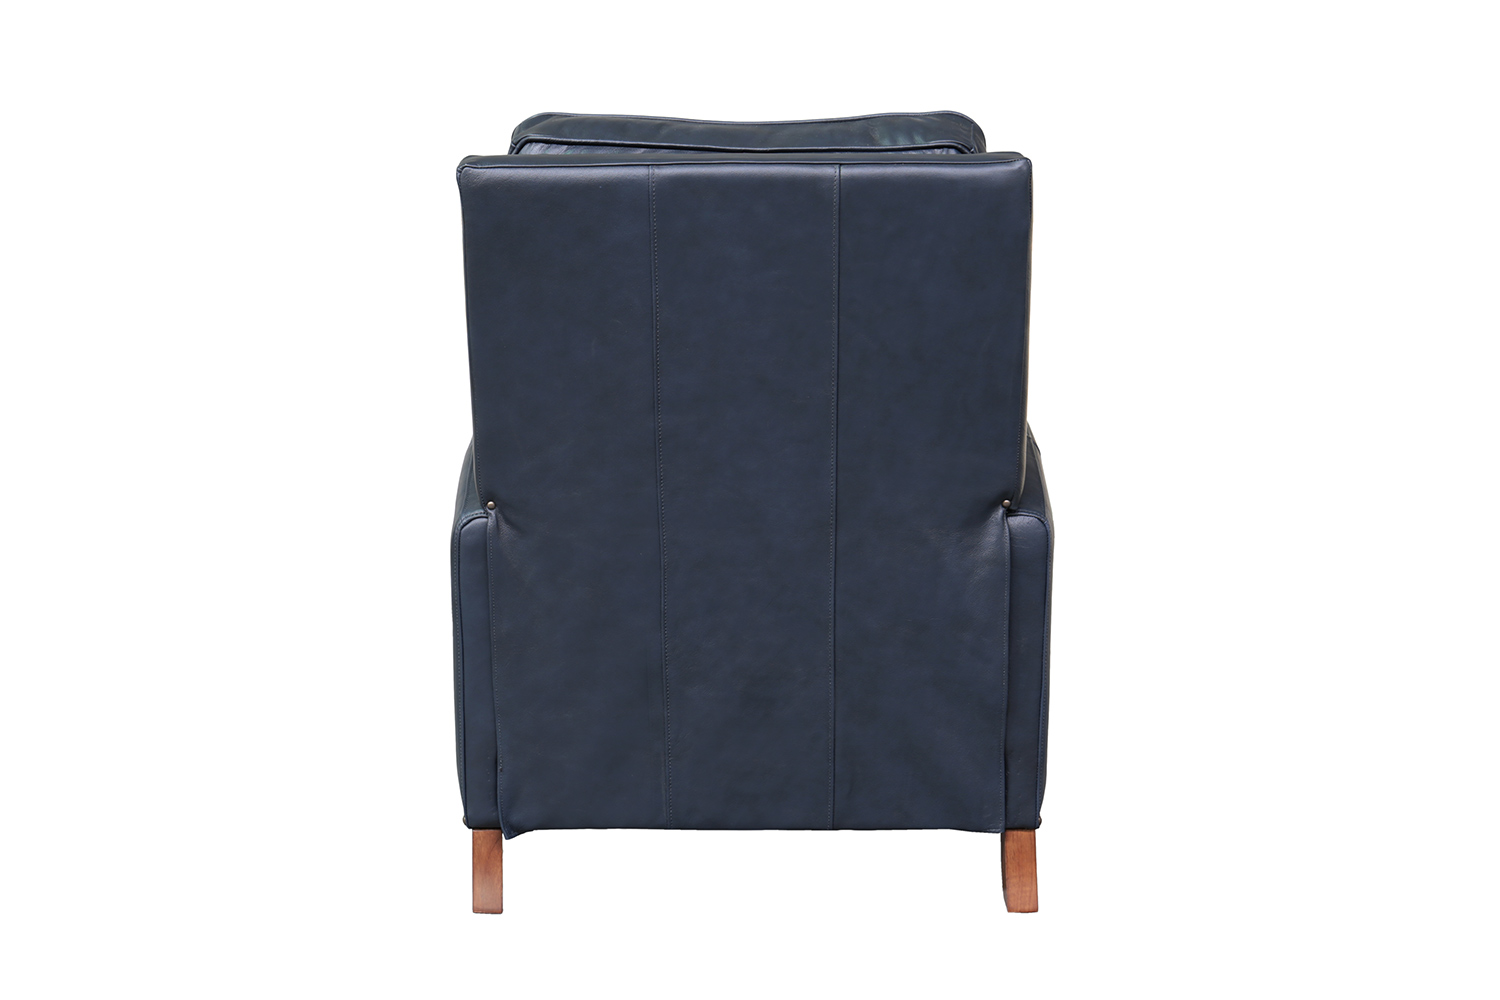 Barcalounger Melrose Recliner Chair - Shoreham Blue/All Leather